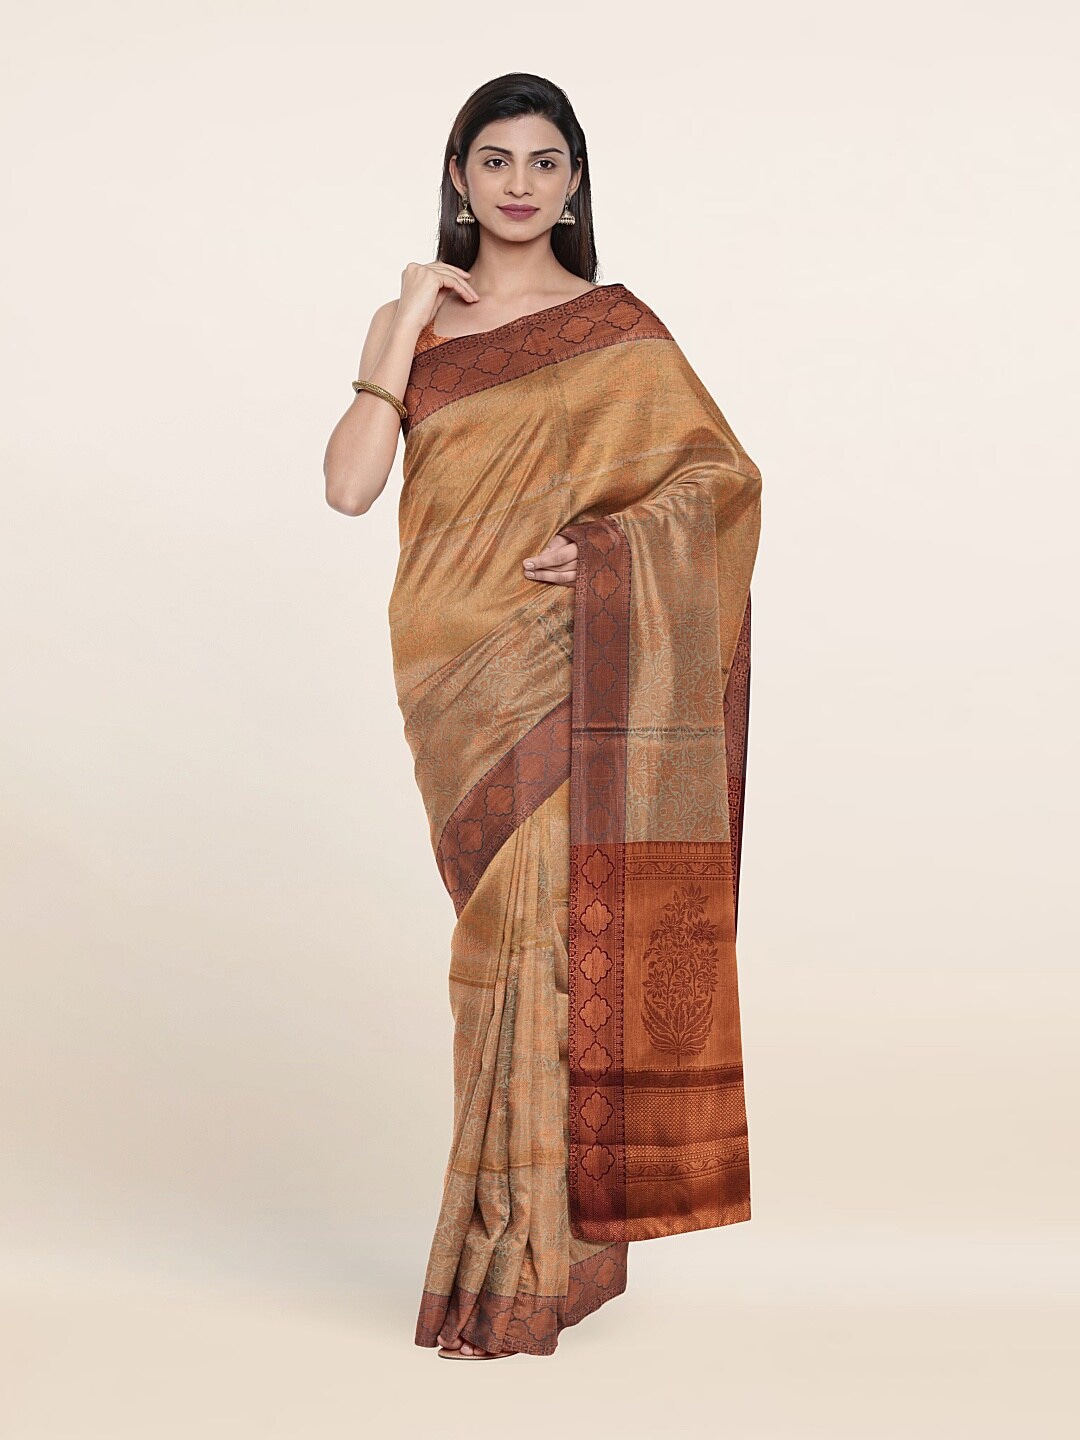 Pothys Green & Brown Woven Design Zari Art Silk Saree Price in India